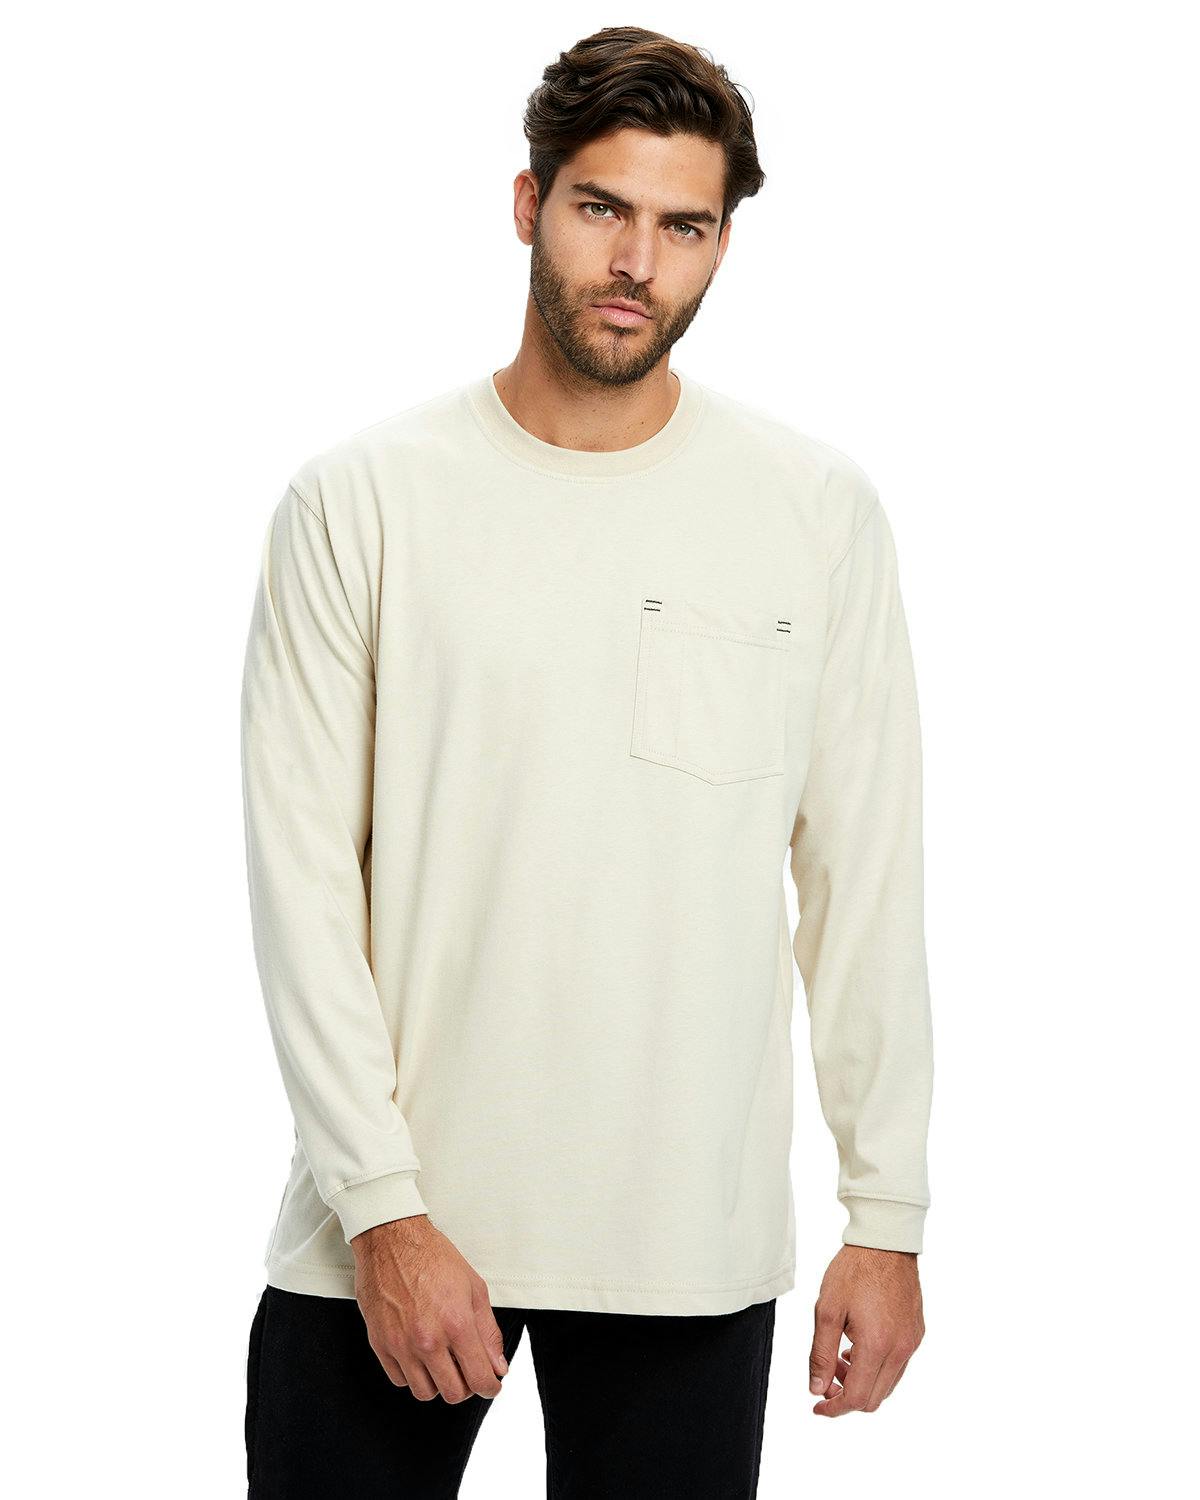 Image for Men's Flame Resistant Long Sleeve Pocket T-Shirt